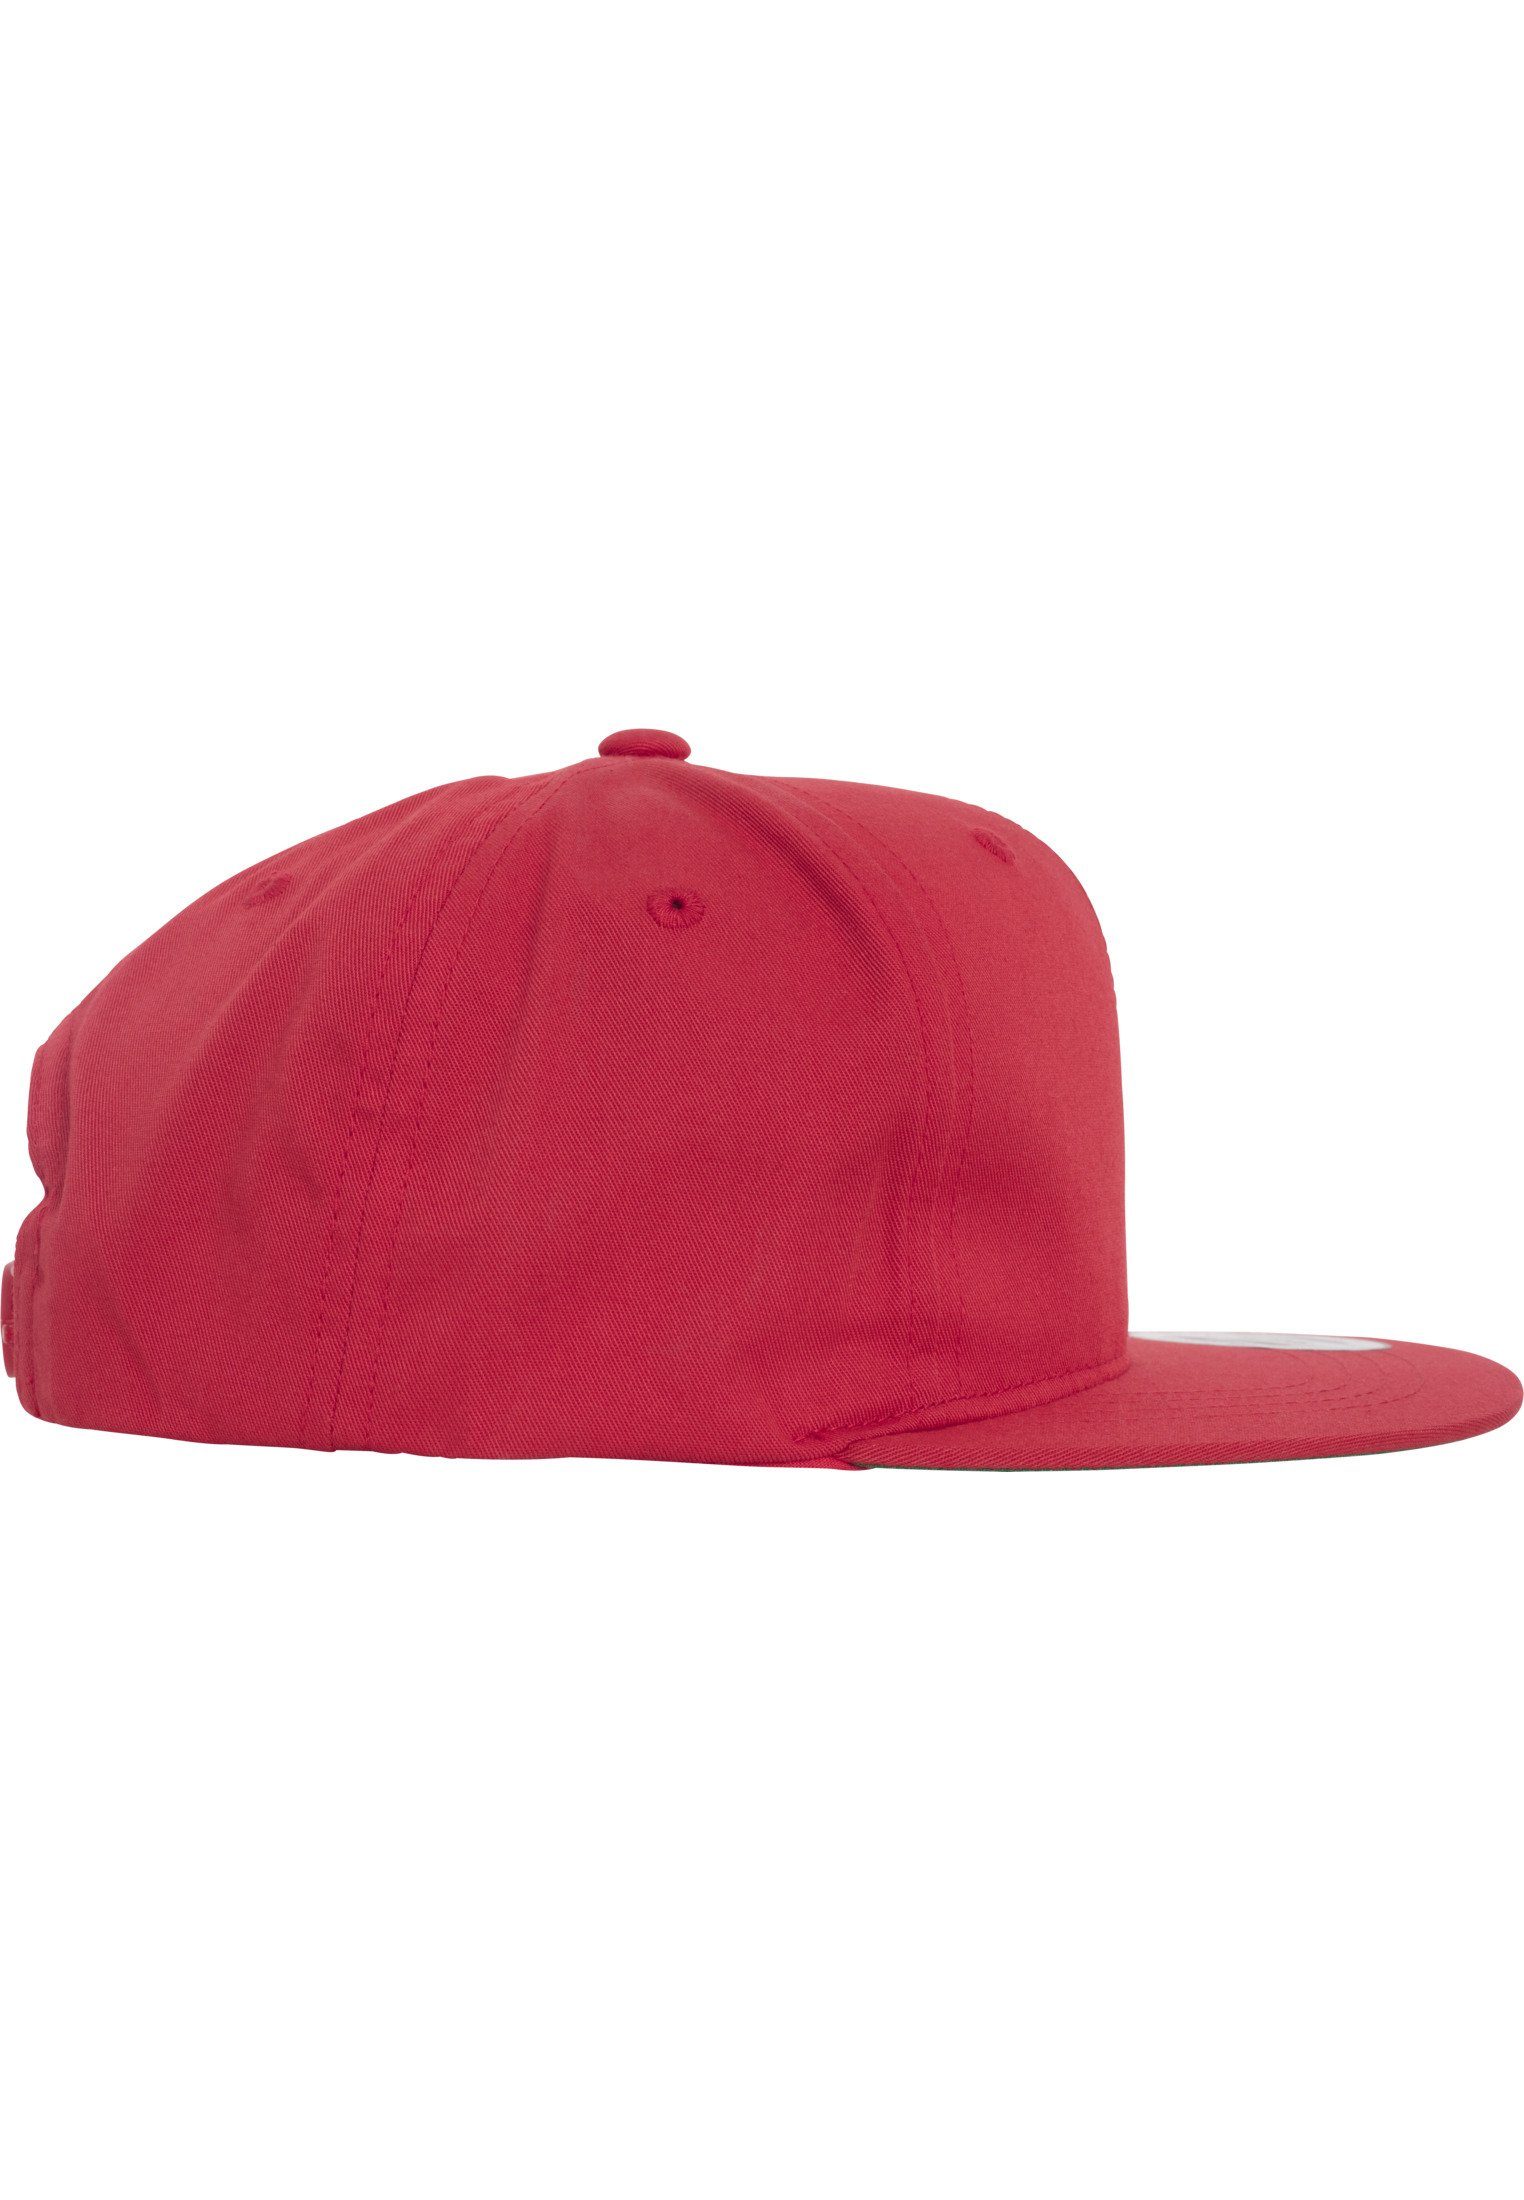 Flexfit red Cap Flex Cap Youth Snapback Pro-Style Snapback Twill